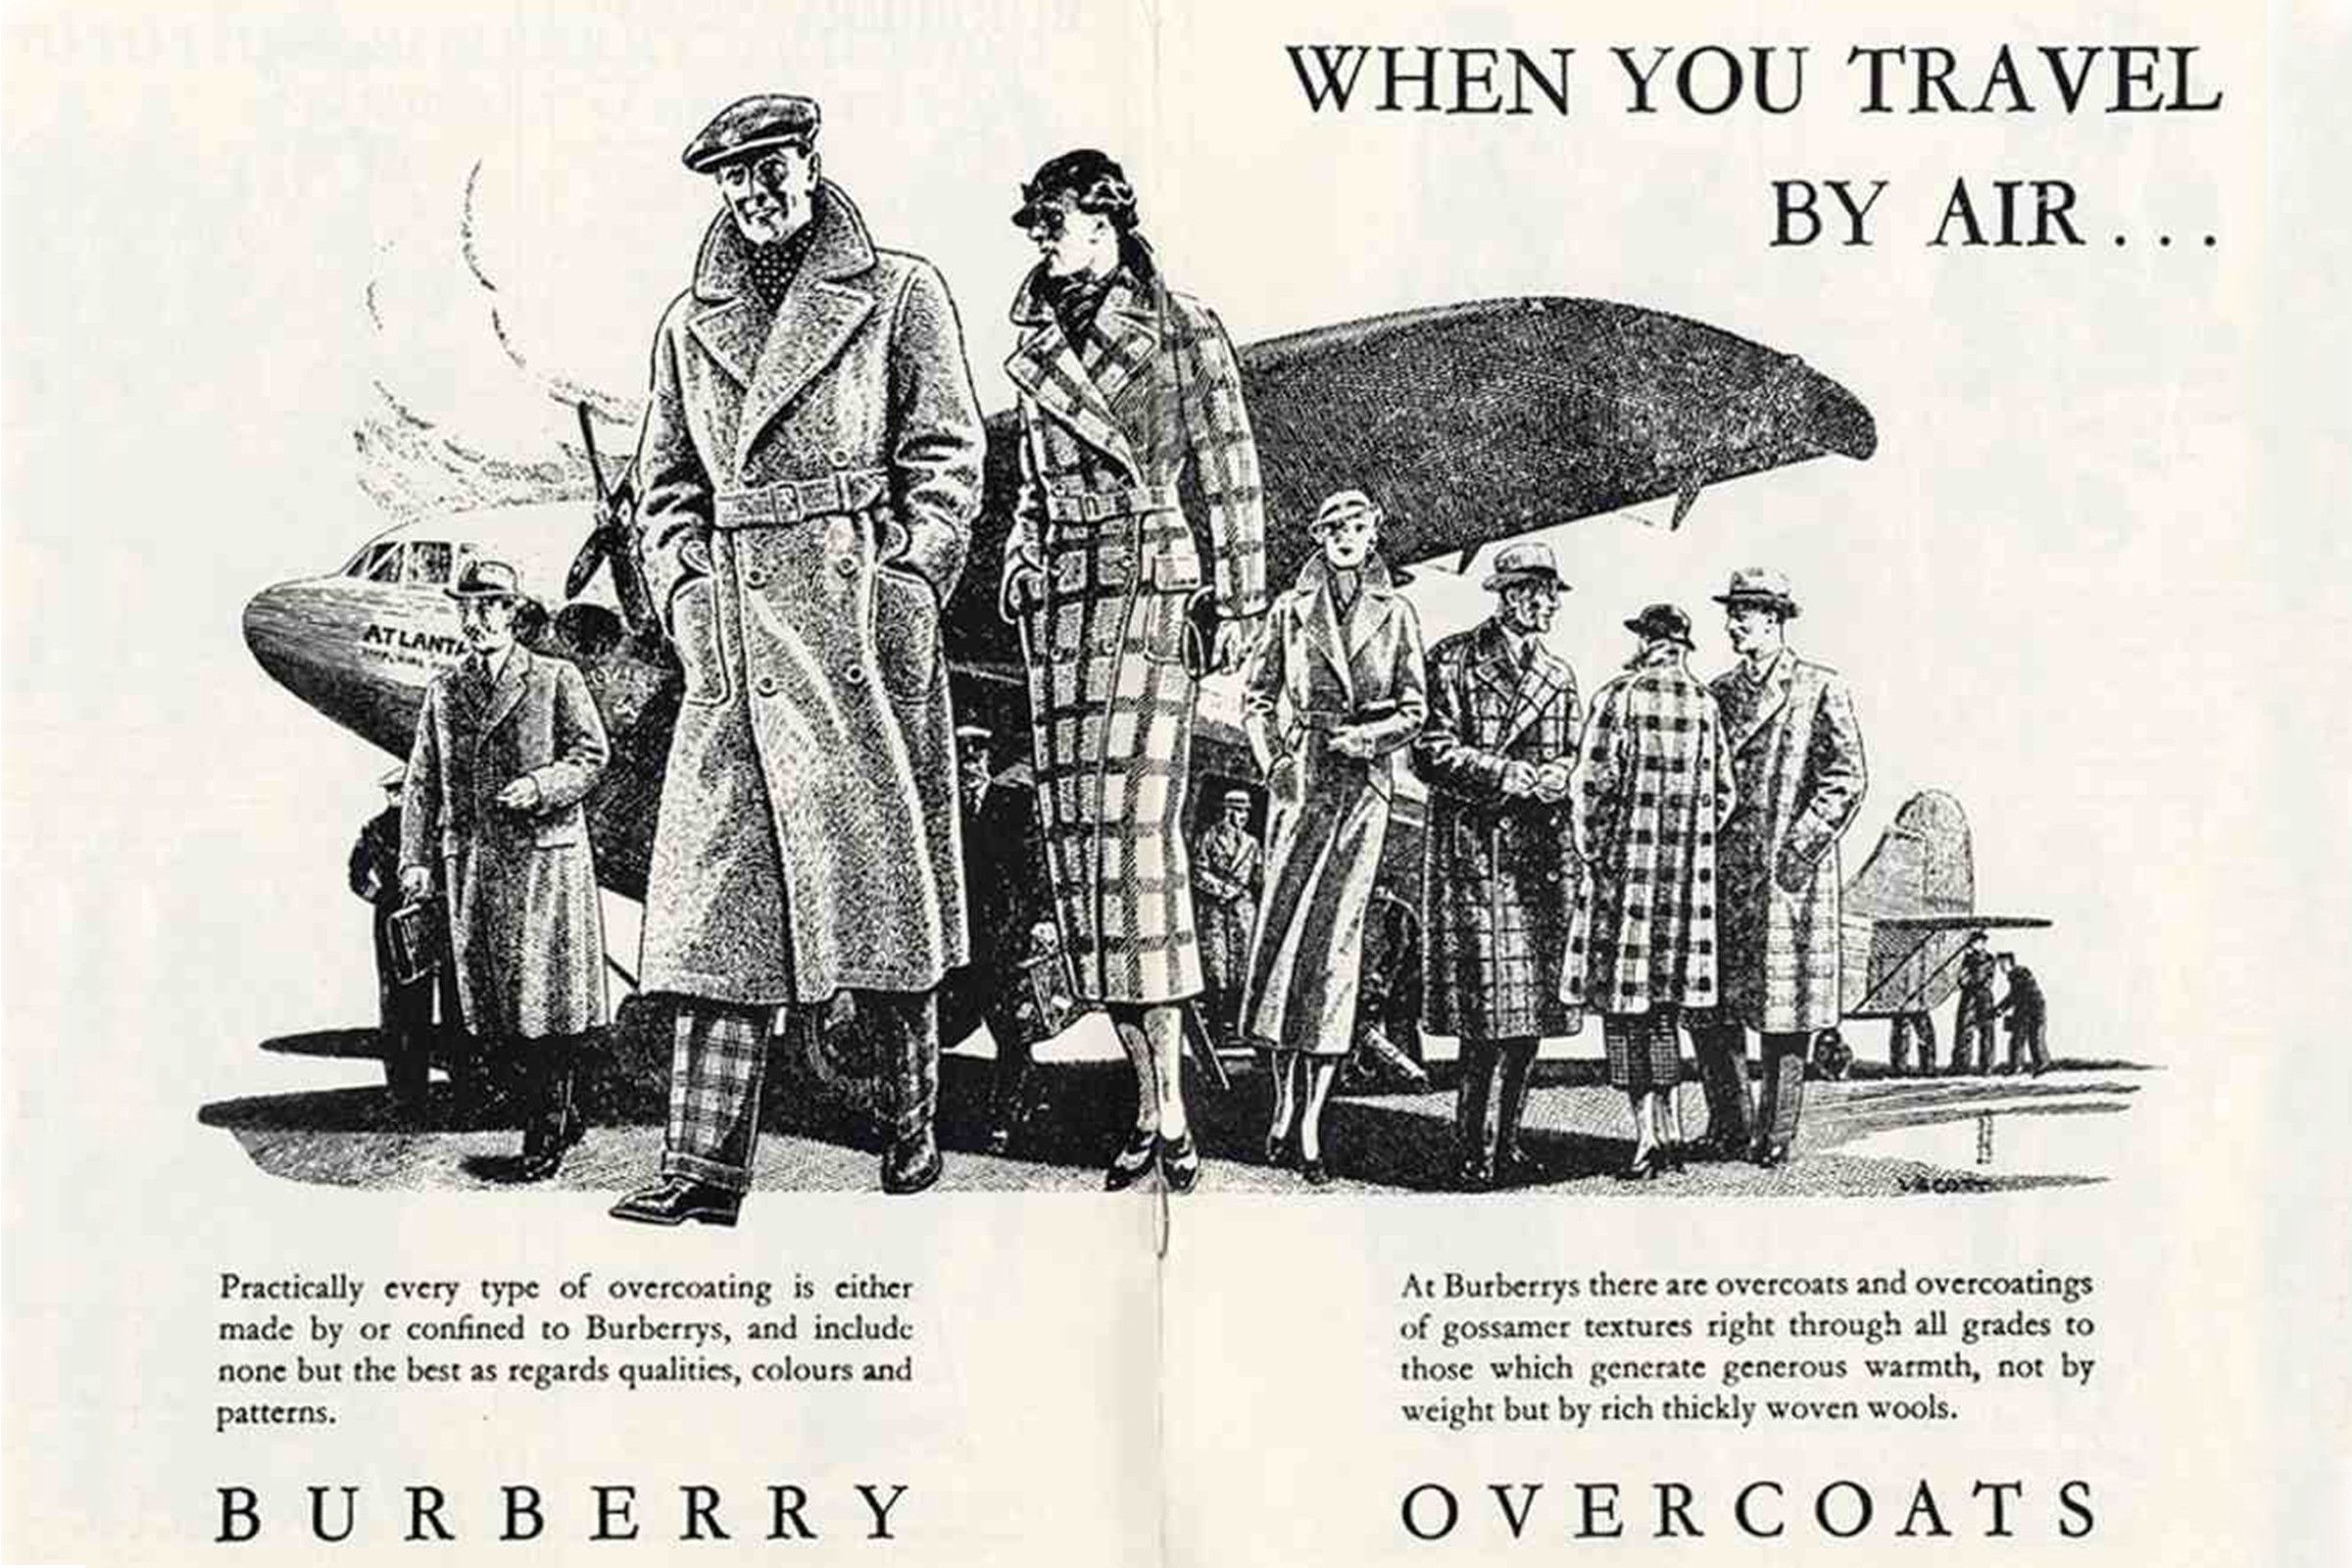 A Burberry trenchcoat advertisement circa WWI-era